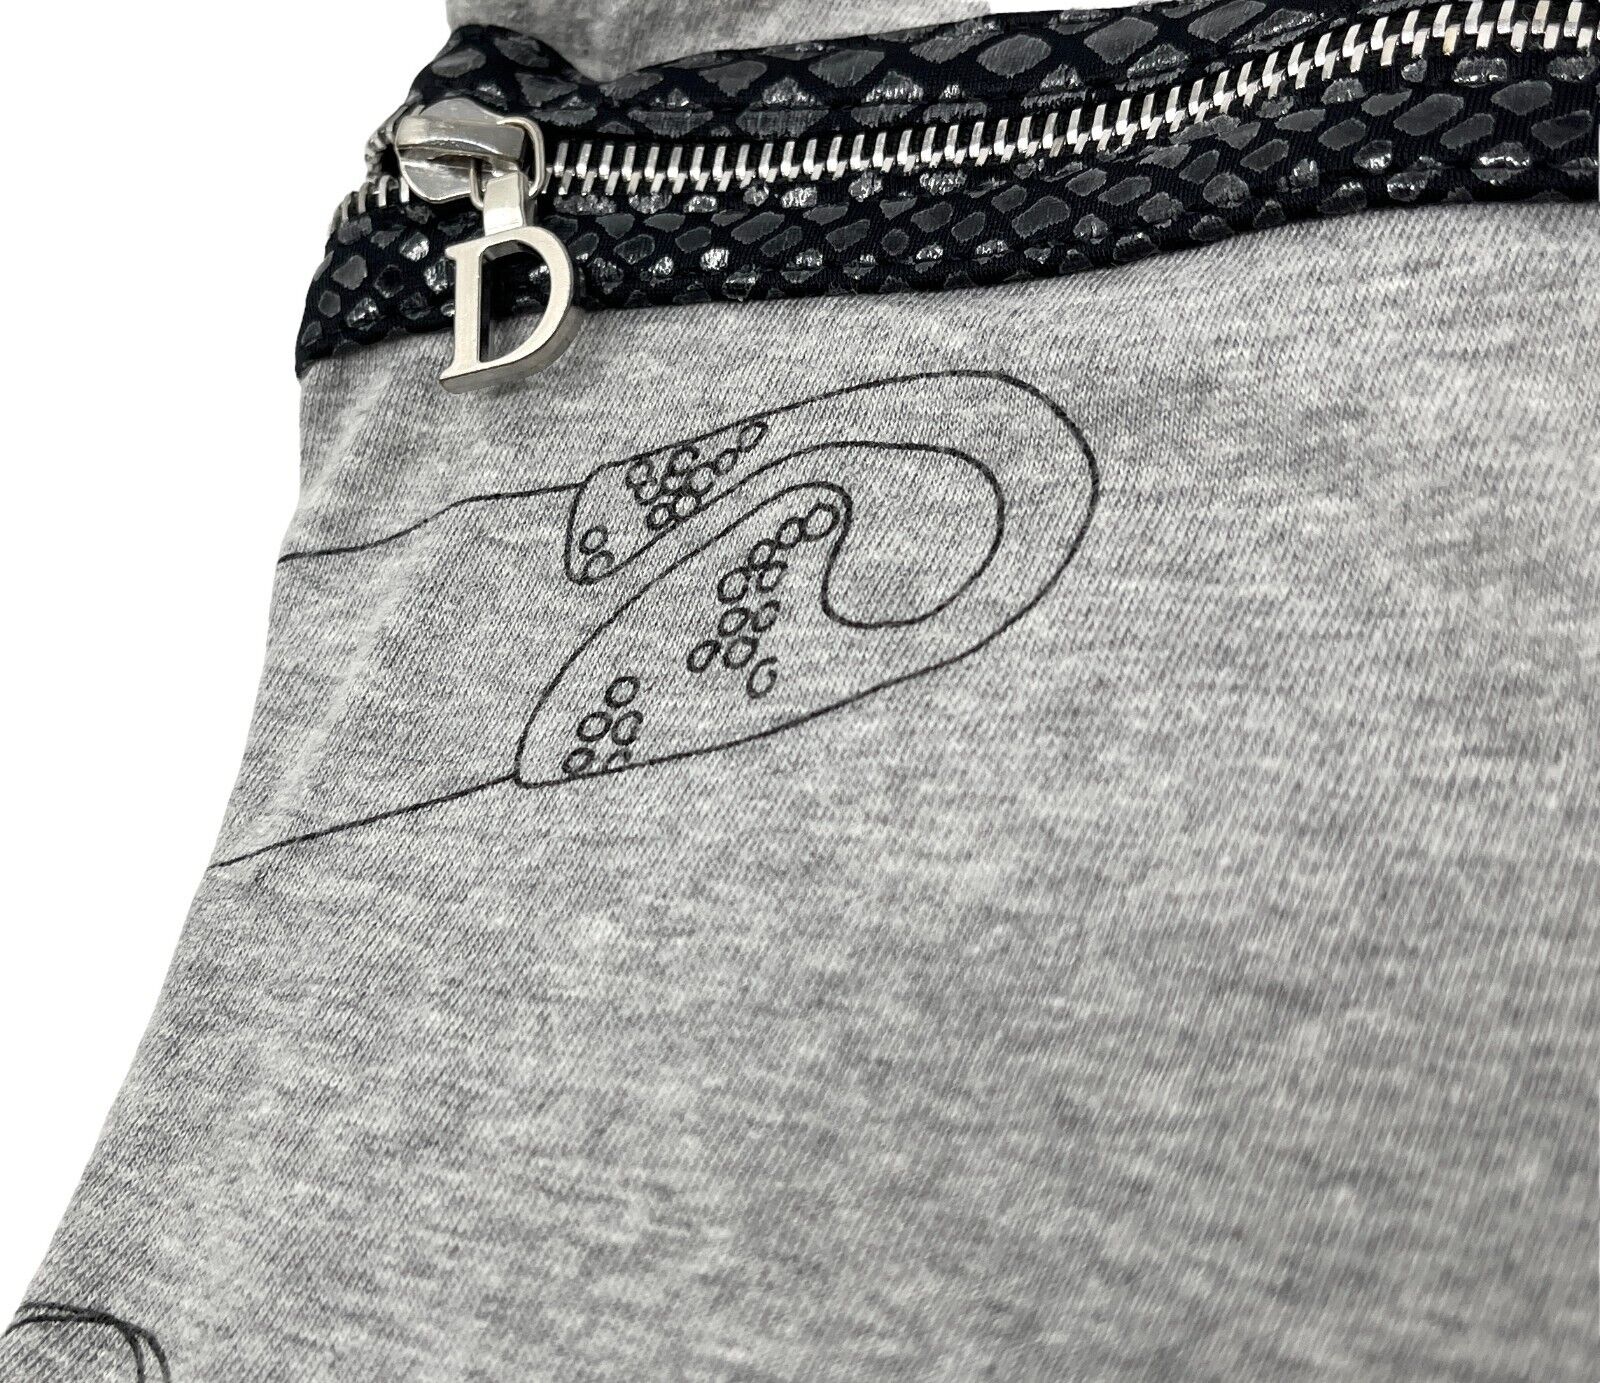 Christian Dior Vintage Logo T-shirts #38 Safety Pin Pattern Top Gray RankAB